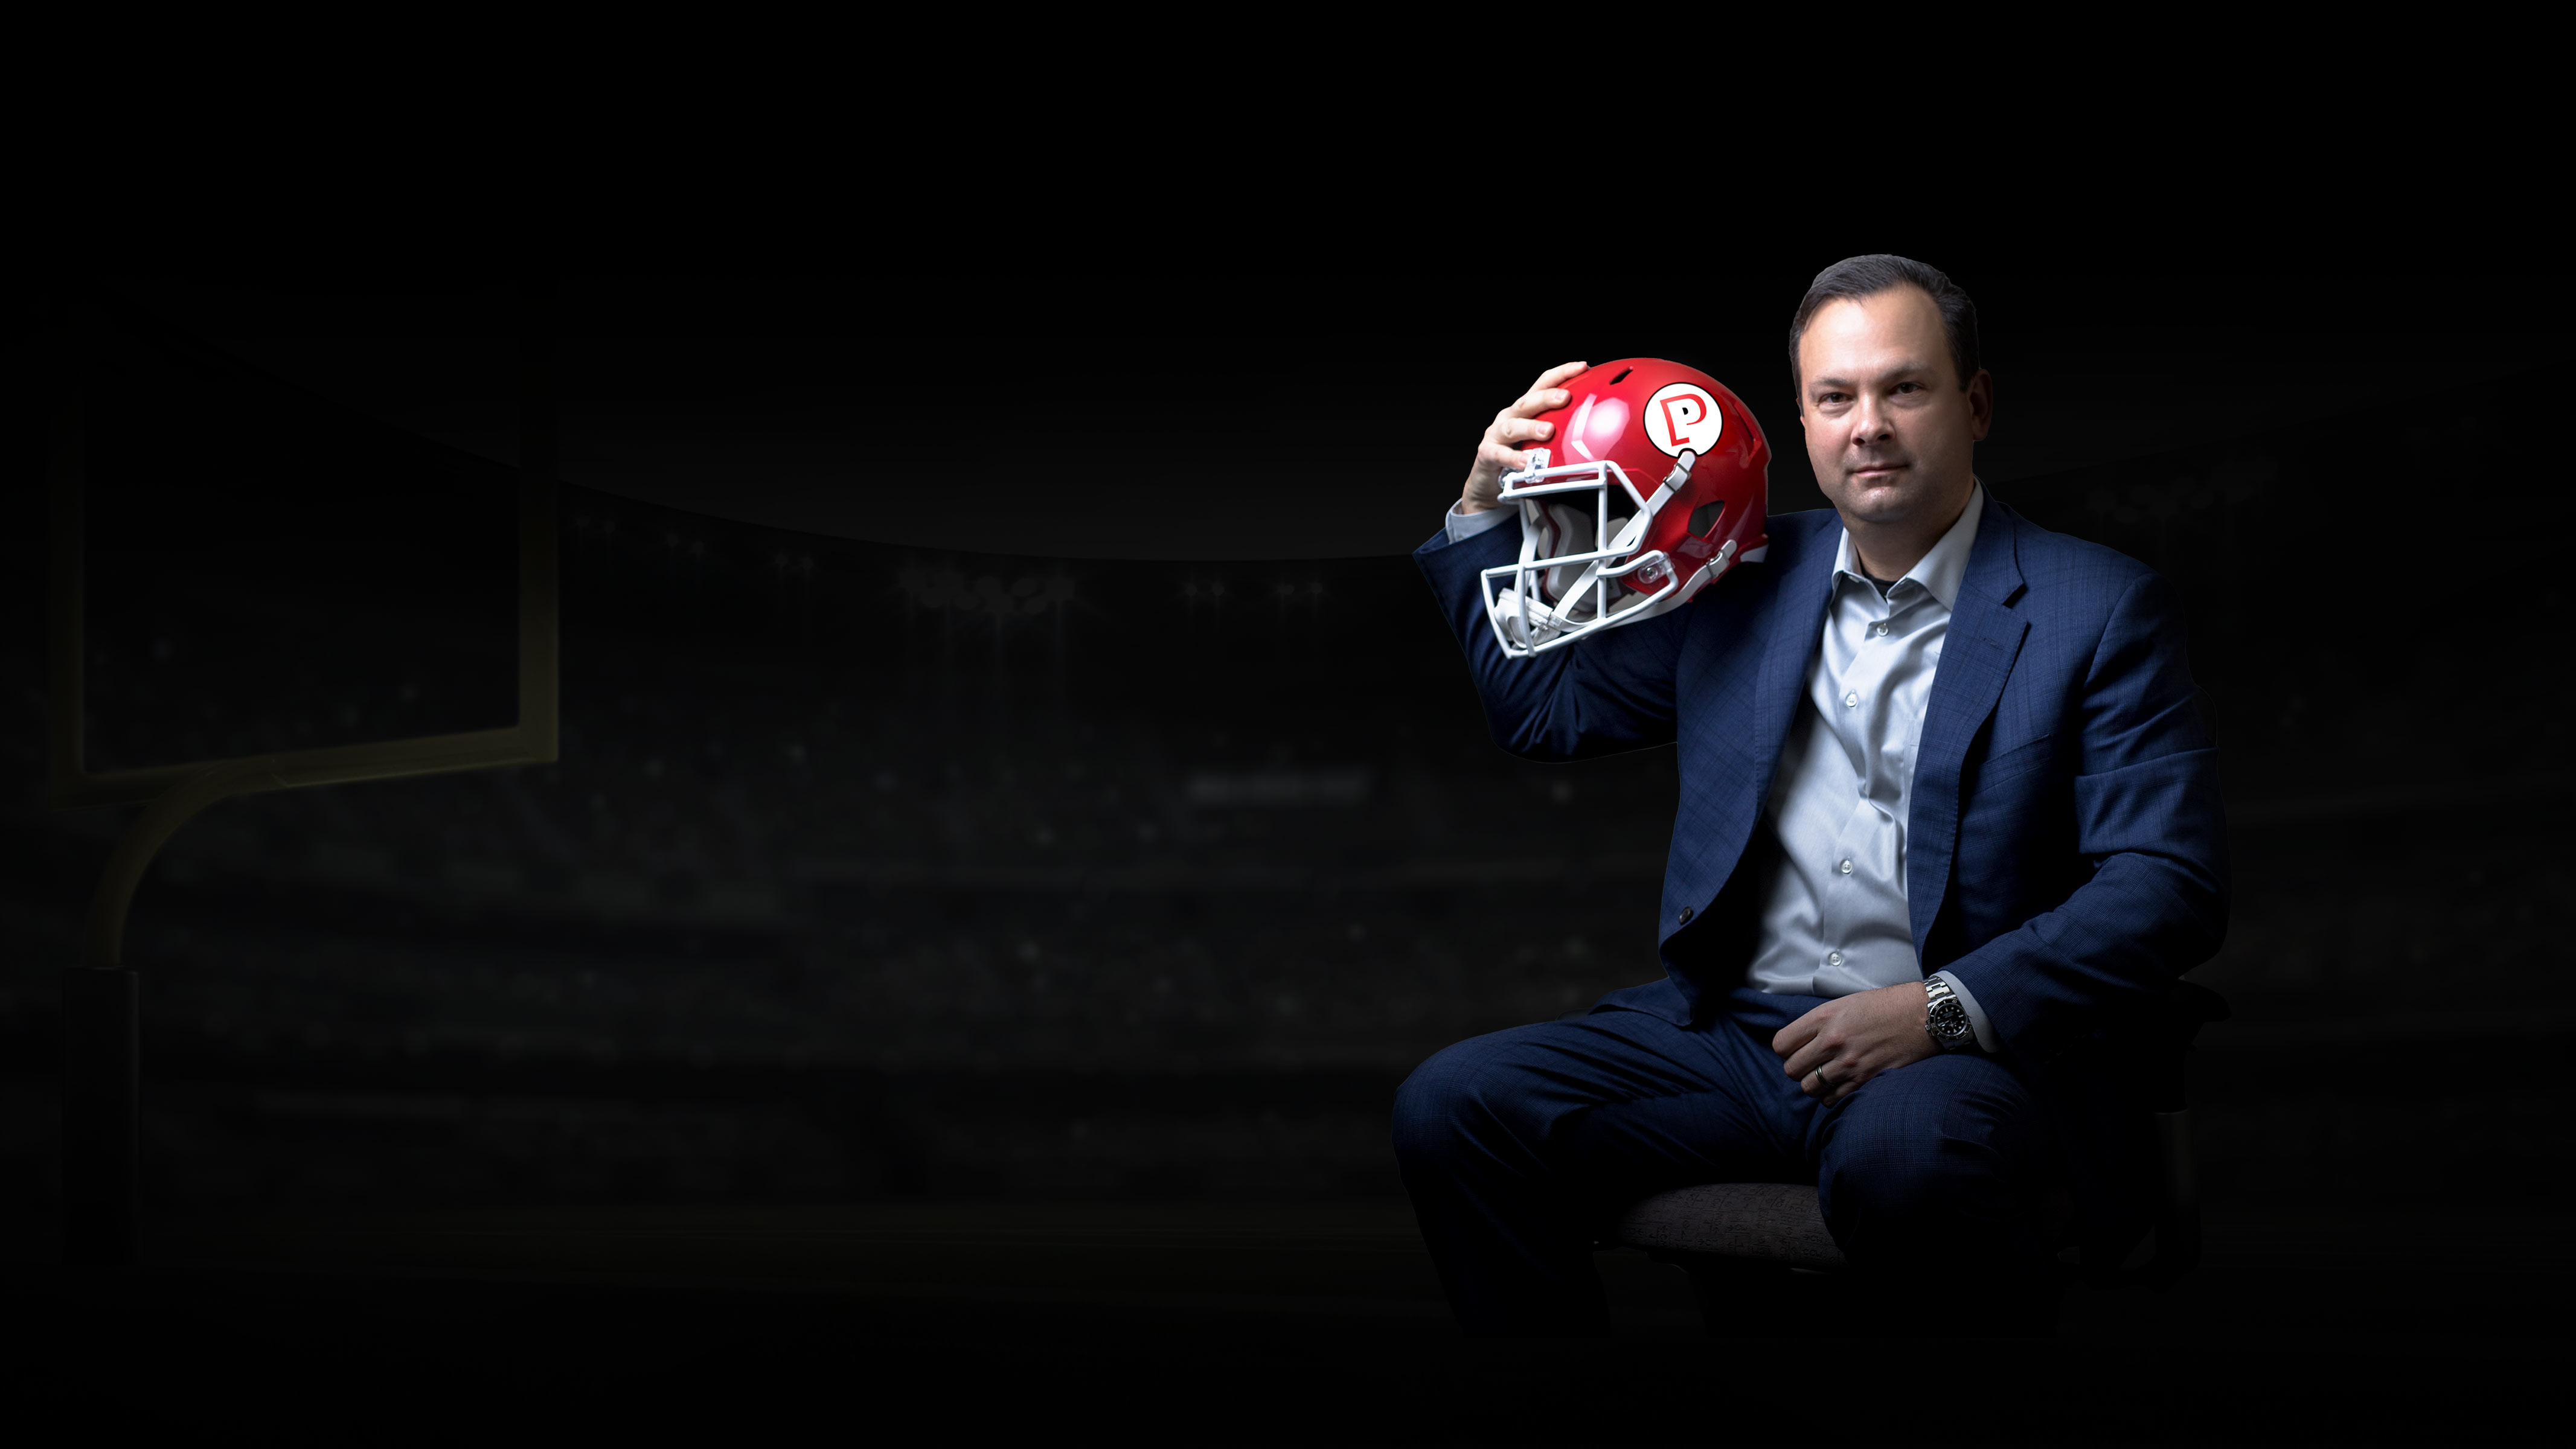 Patrick Schwierking, VP, Sales, holding a football helmet